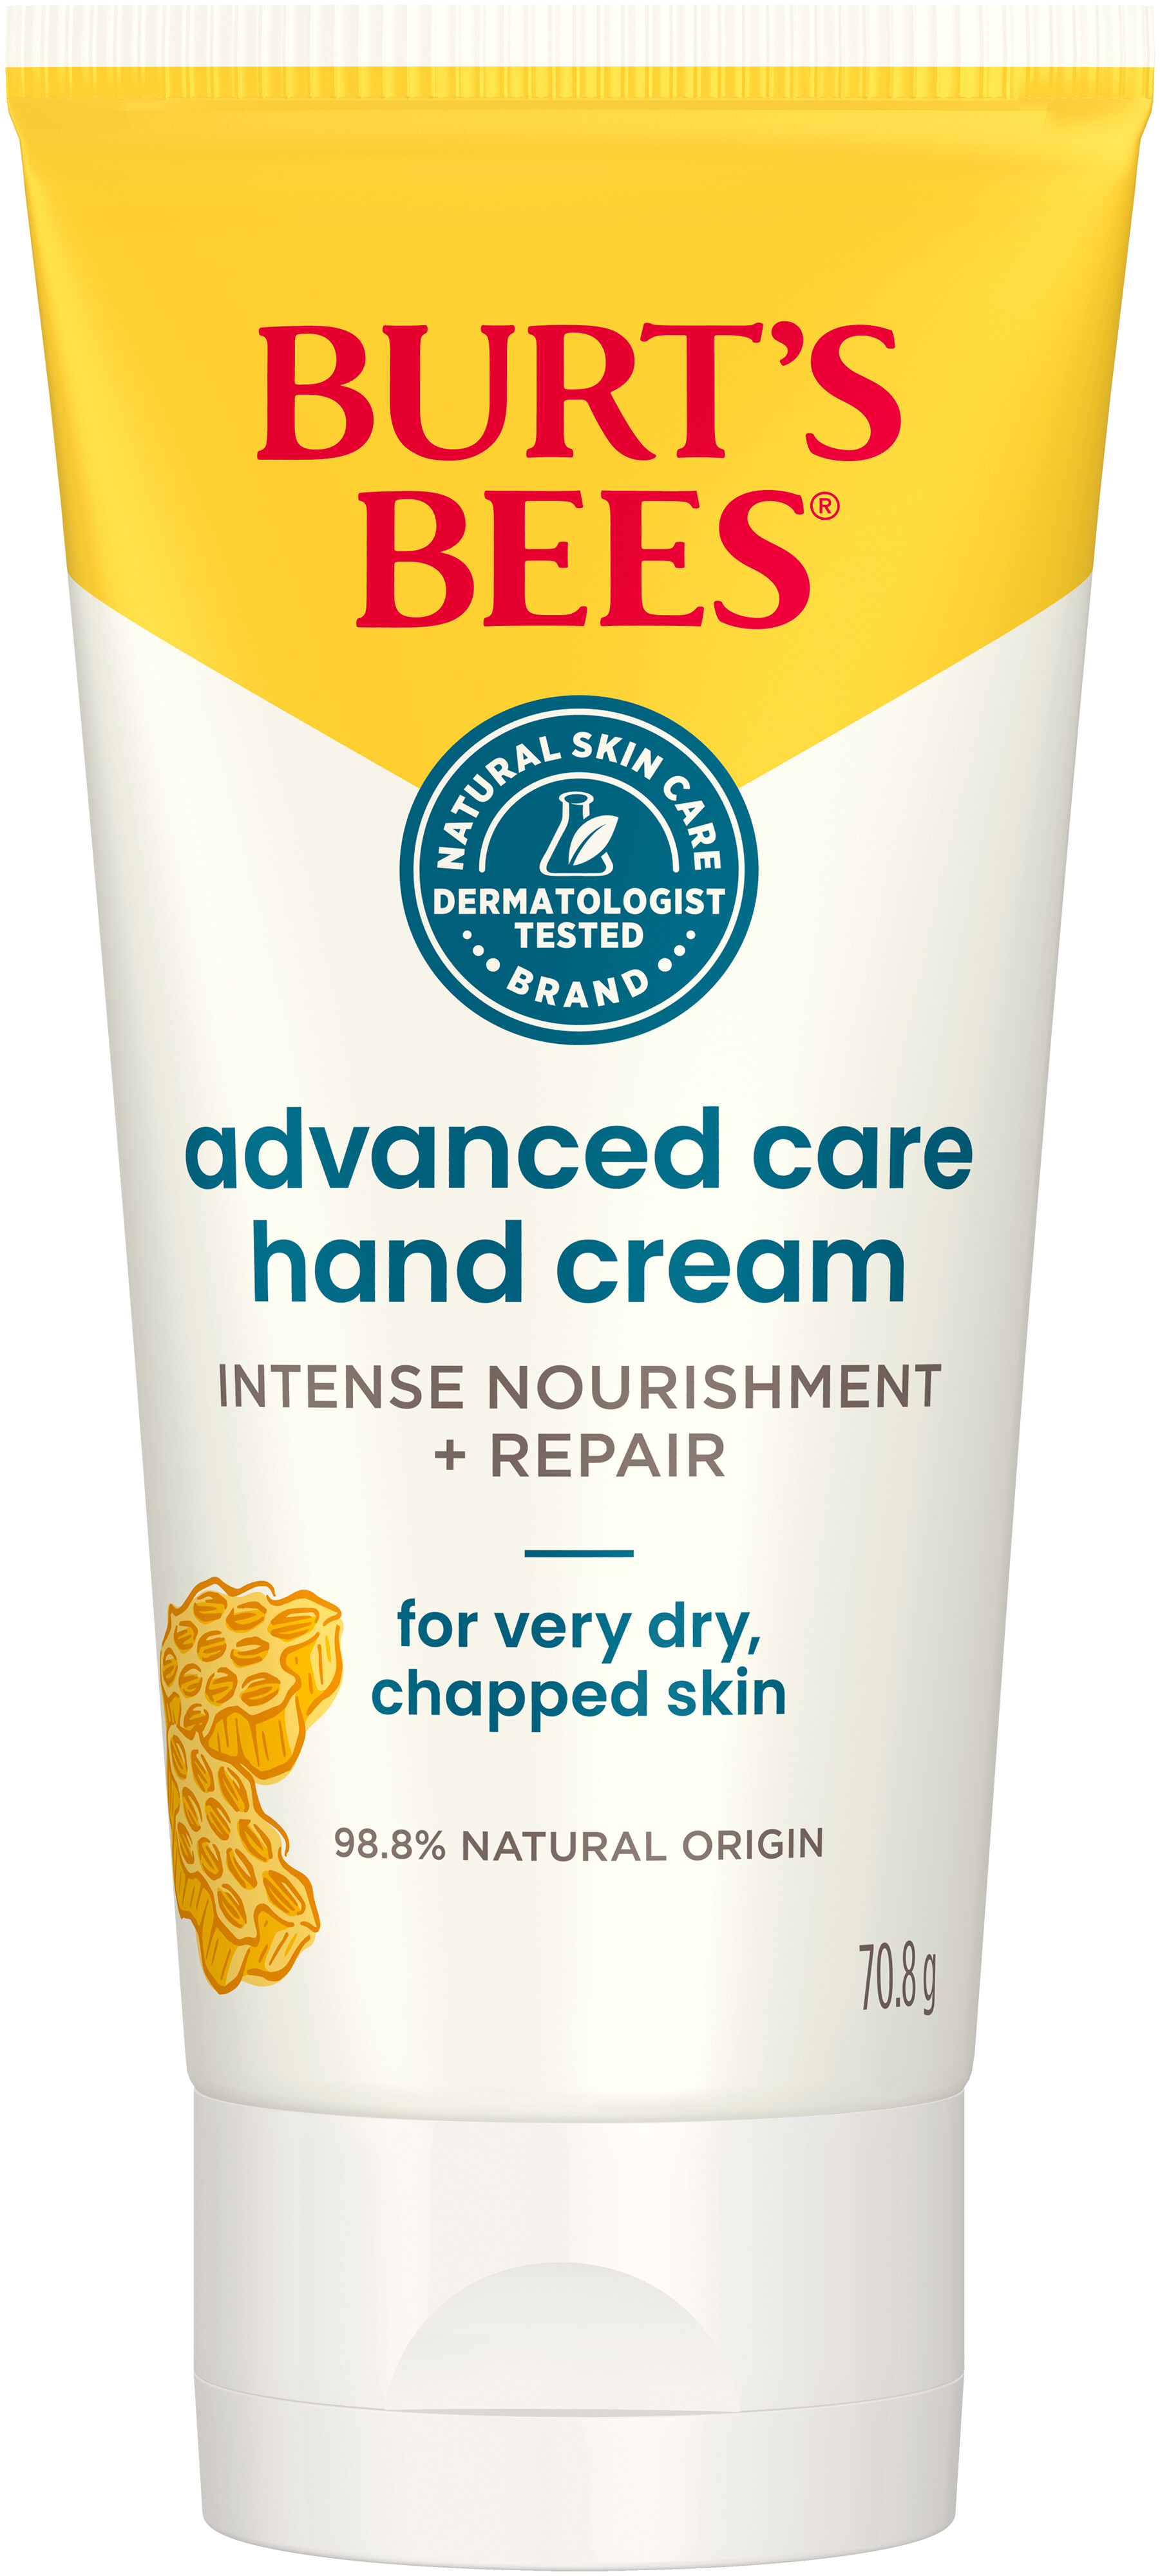 Advanced Hand Care Beeswax